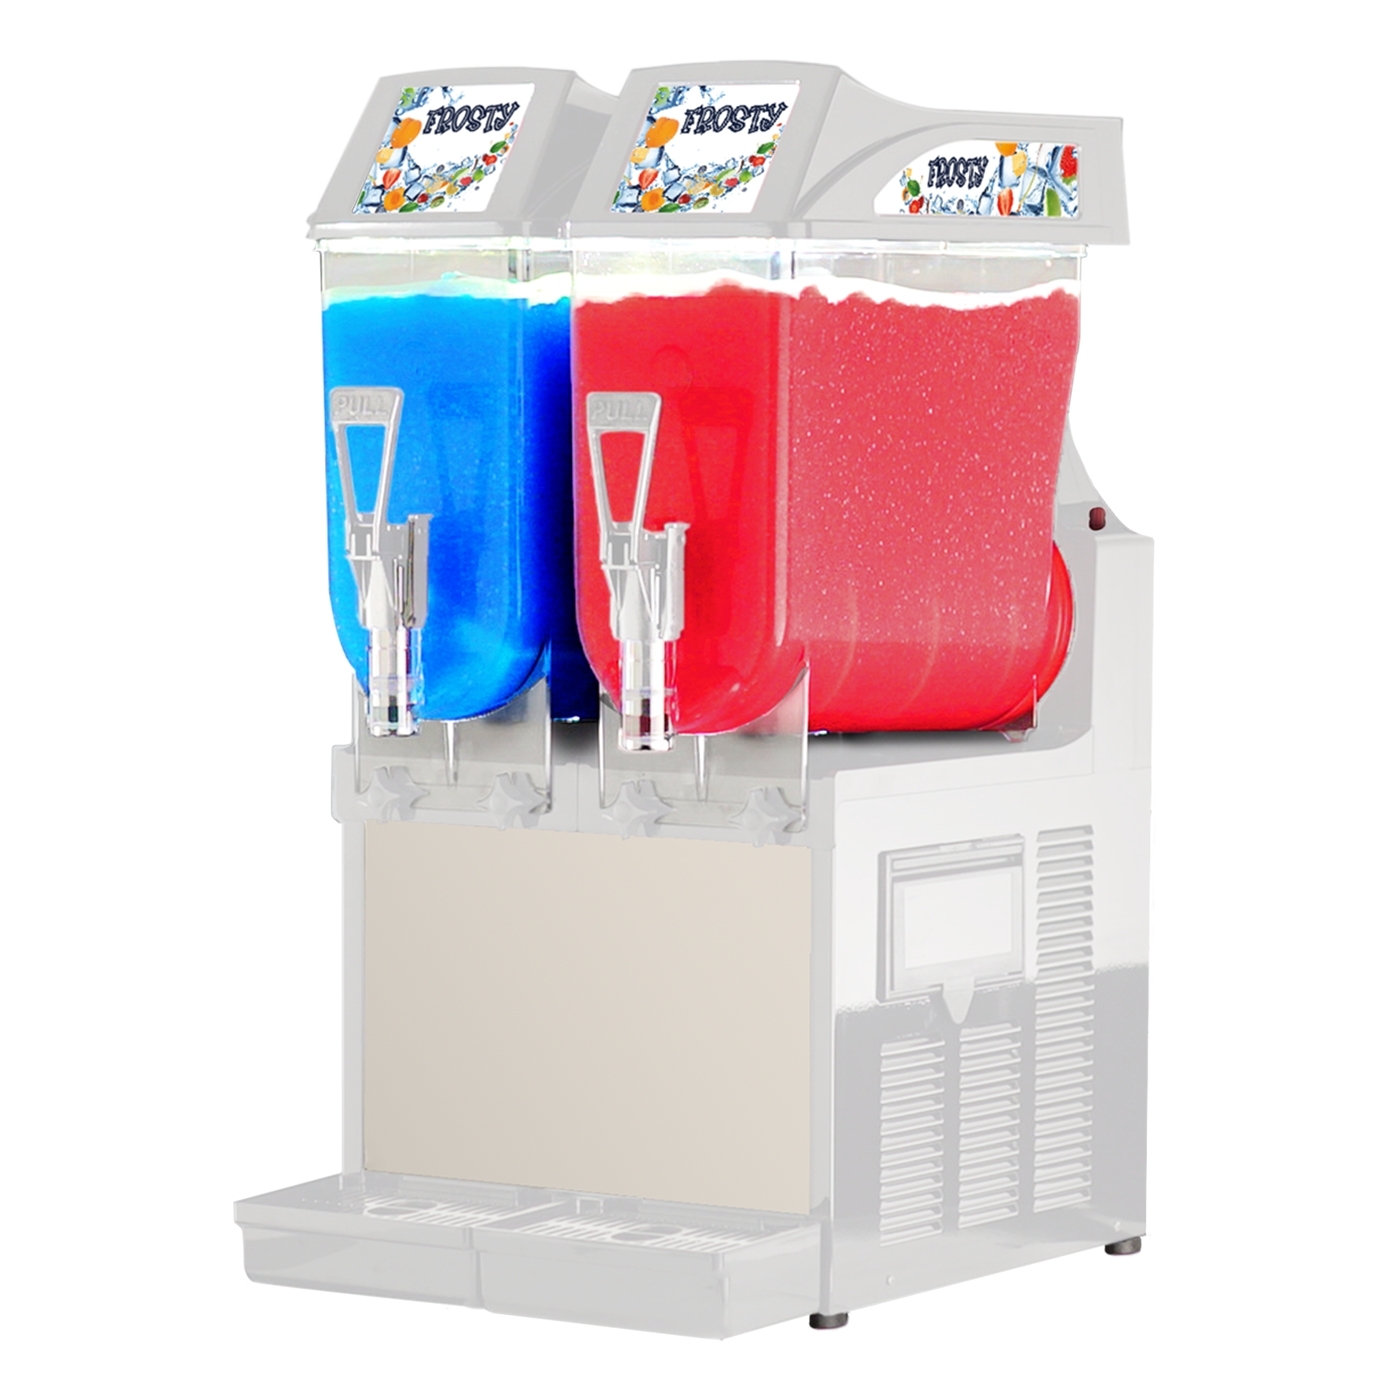 AMPTO GRA-122 Frozen Drink Machine, Double 3 Gallon Bowl